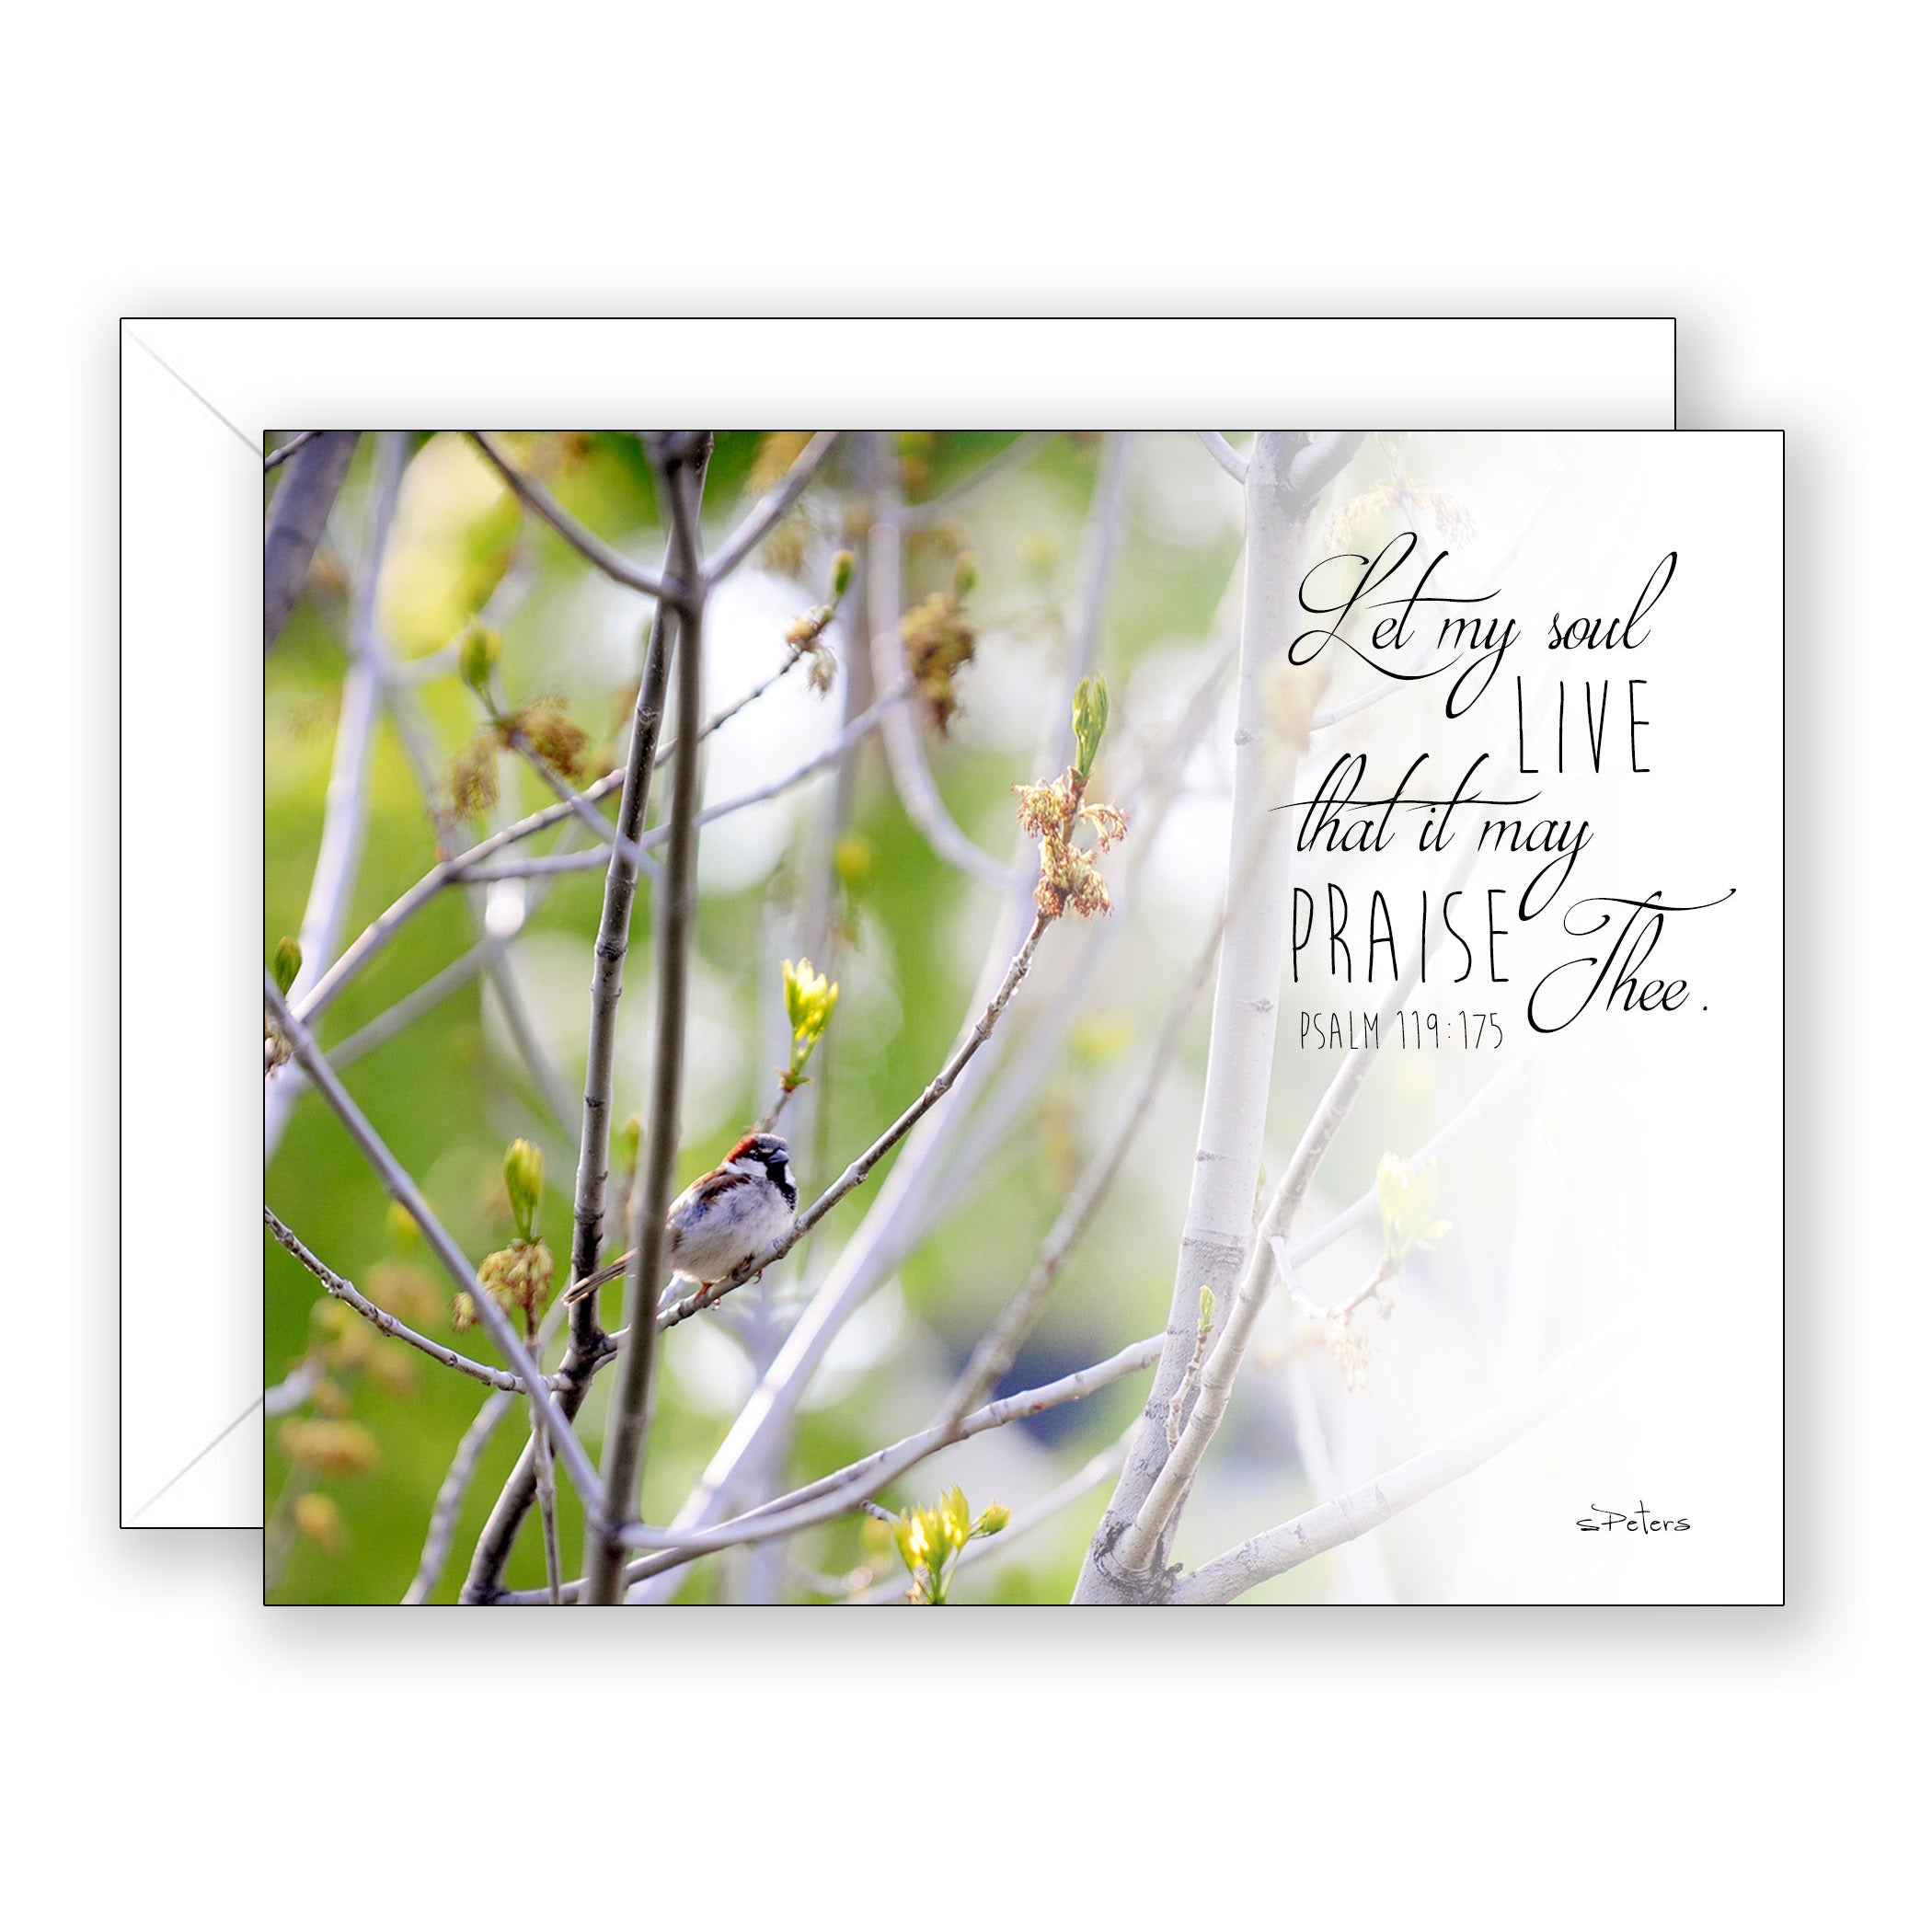 Spring Prayer (Psalm 119:175) - Encouragement Card (Blank)